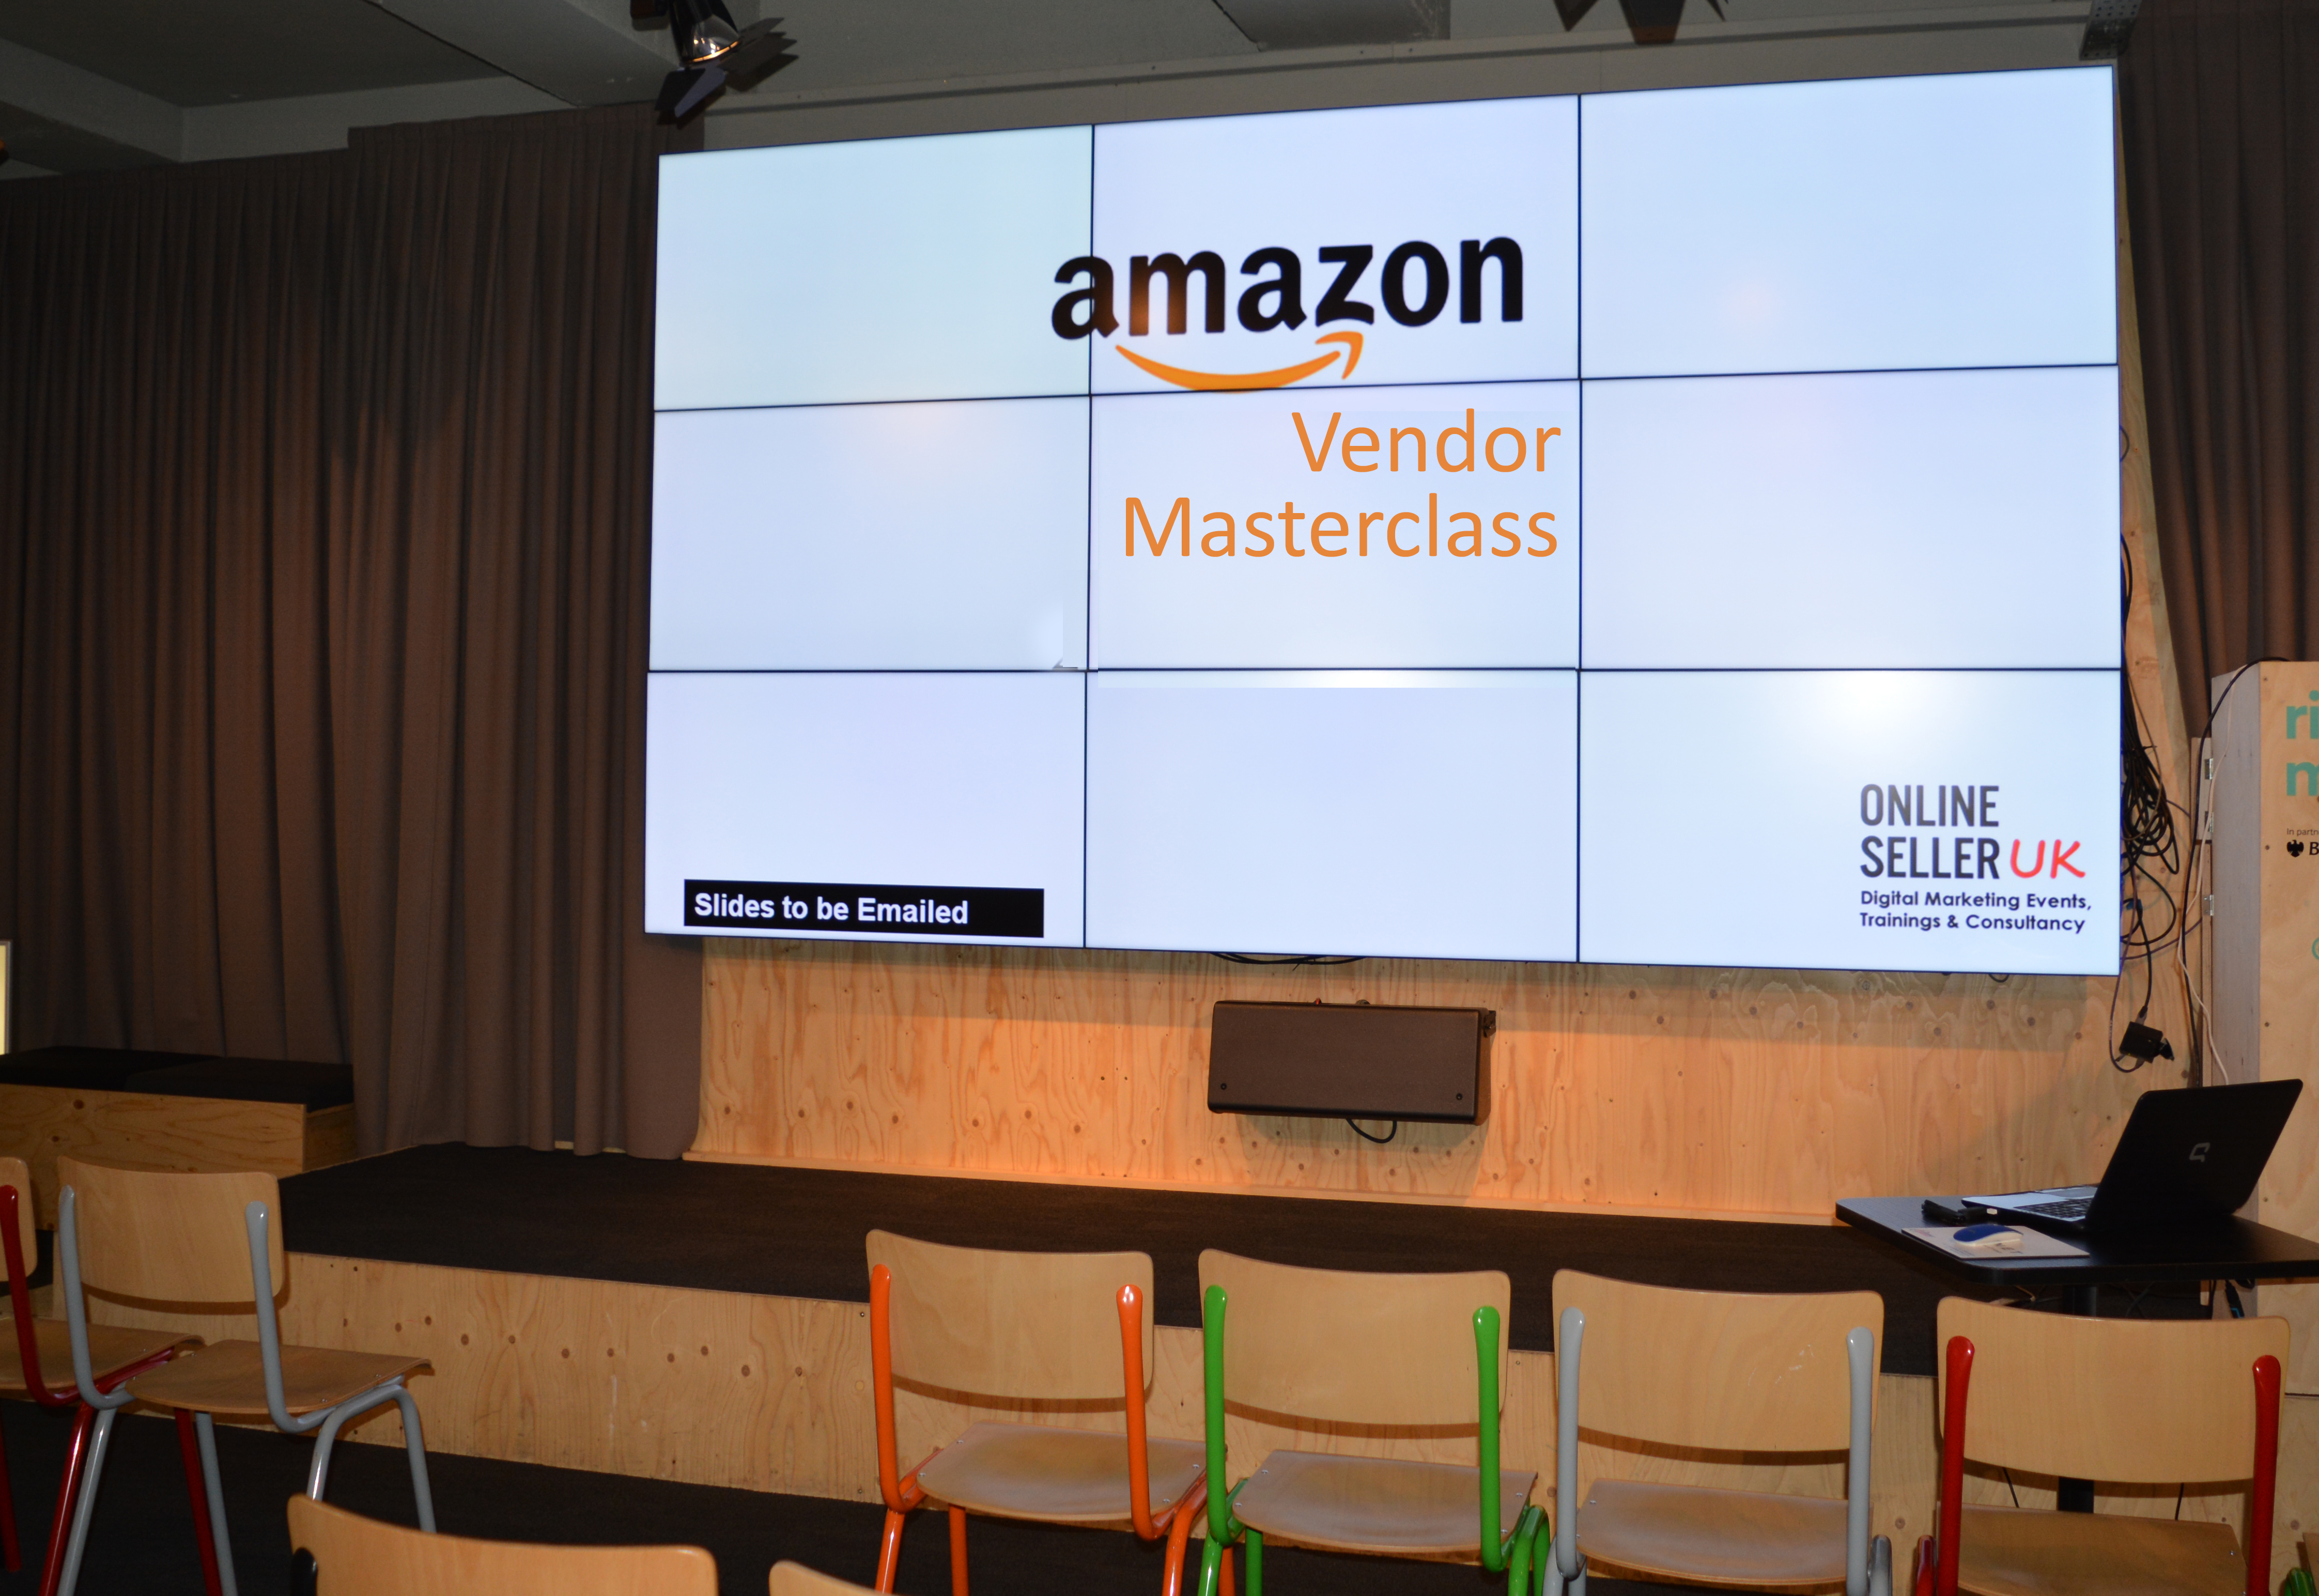 Amazon VENDOR Master Class Training Course - Online Seller UK